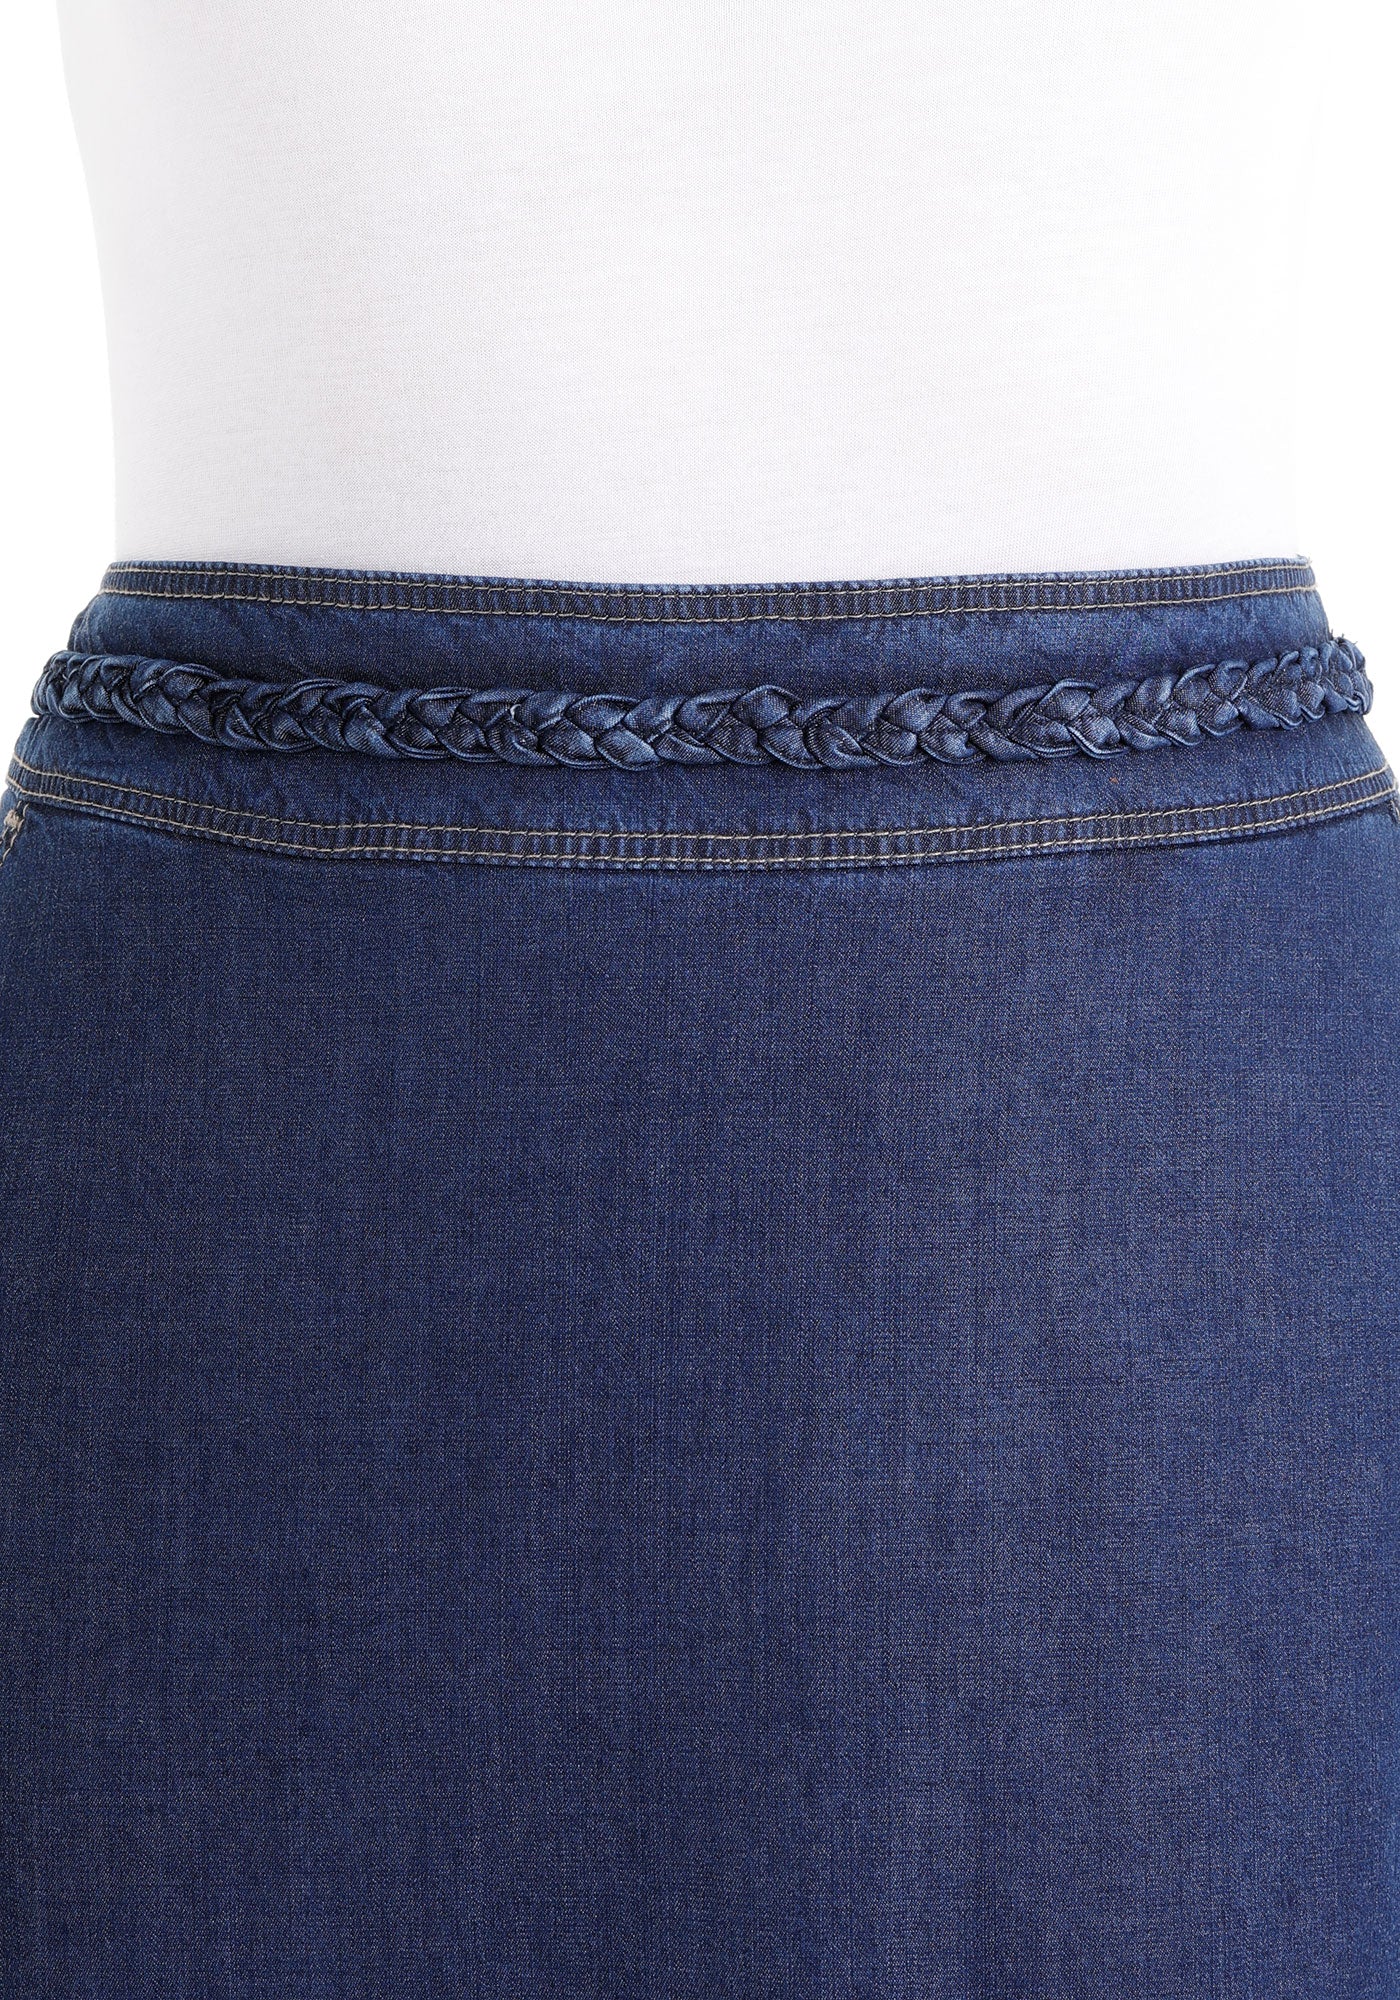 Guzella Navy Tencel A-Line Denim Midi Skirt with Knit Waistband Belt and Pockets Guzella